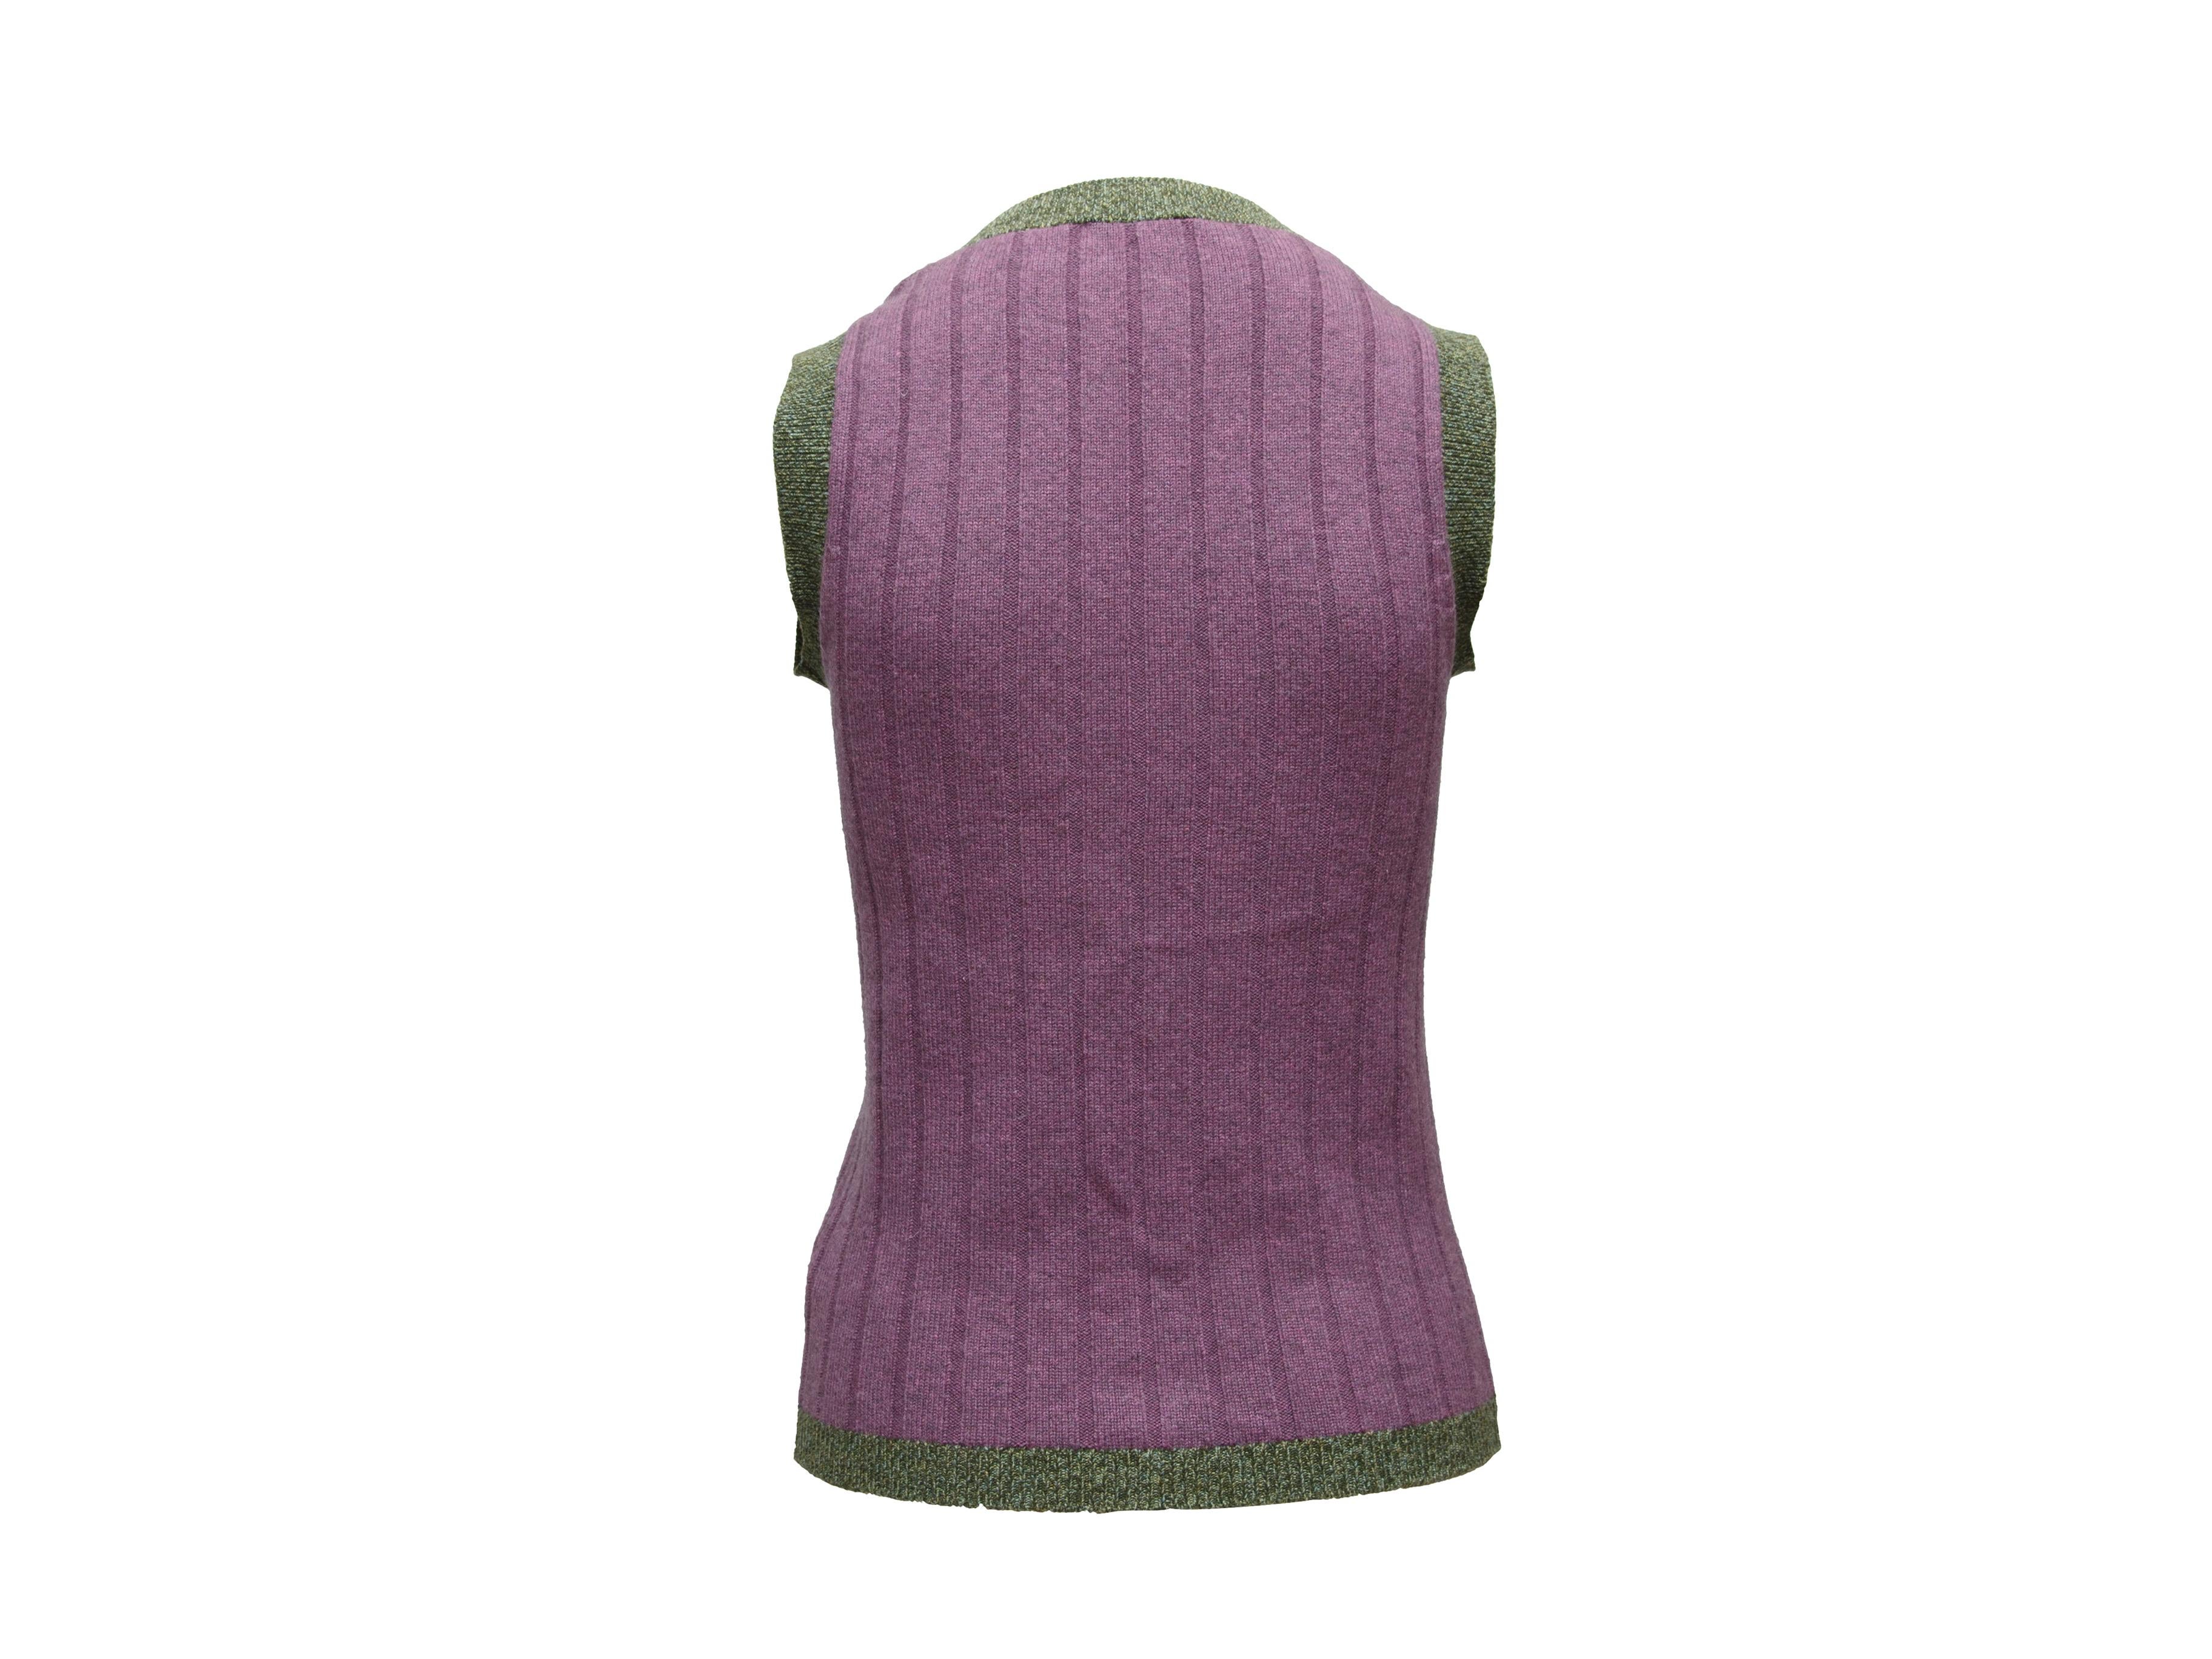 Product details: Vintage purple and green cashmere vest by Chanel Boutique. V-neck. Button closures at center front. 24